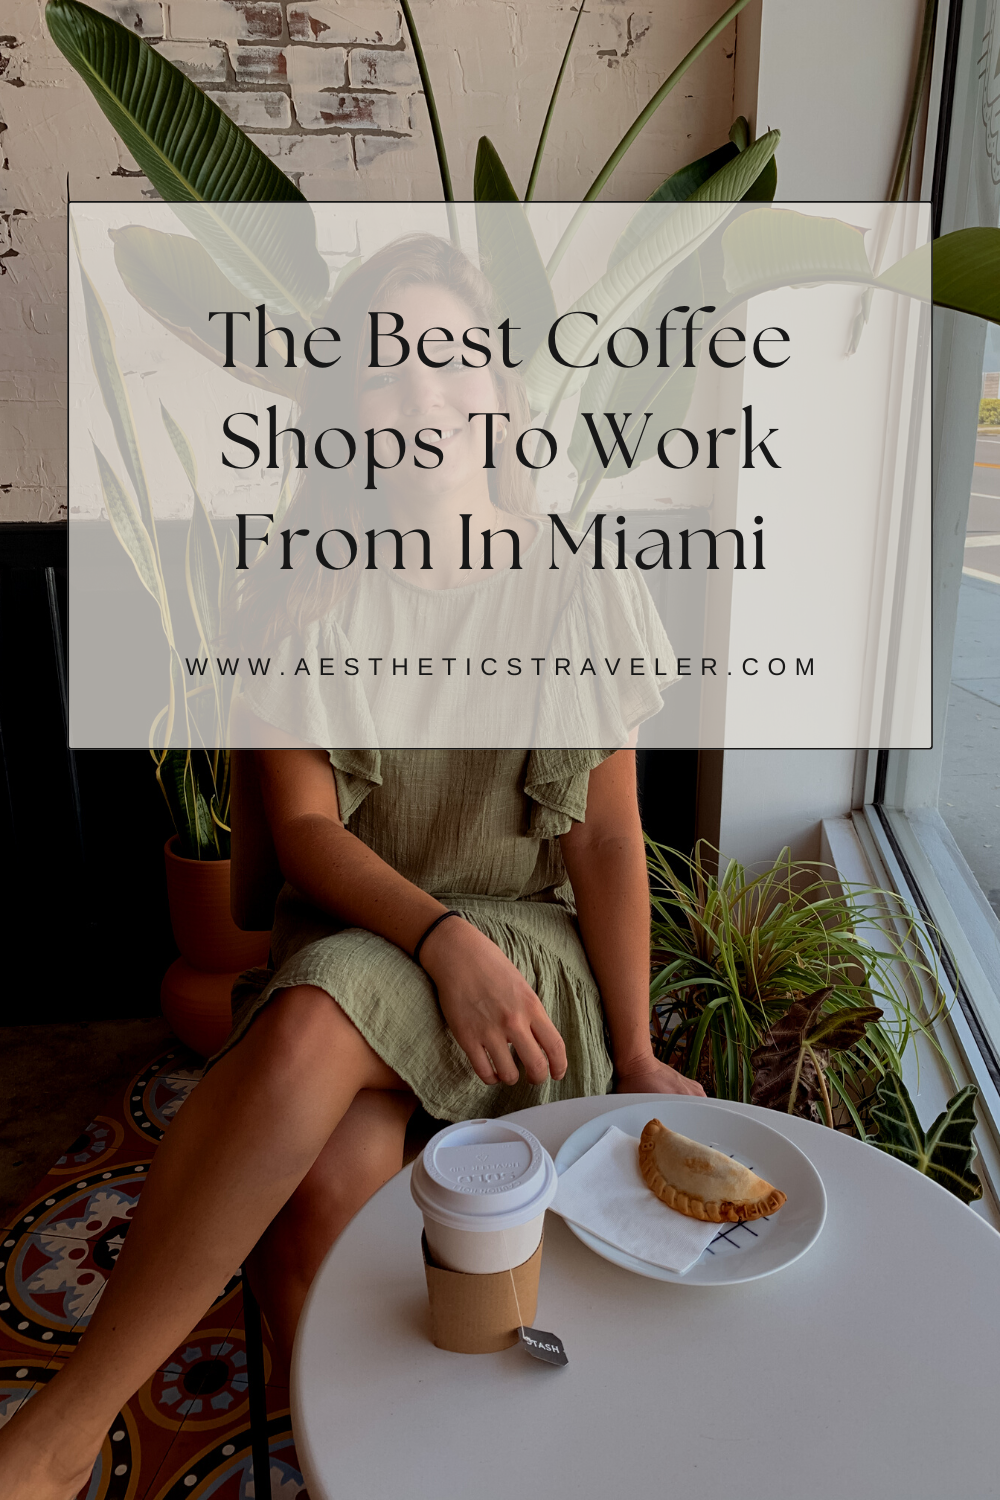 The Best Coffee Shops To Work From In Miami | aestheticstraveler.com luxury travel and design blog | IG: @itskarenalexandra